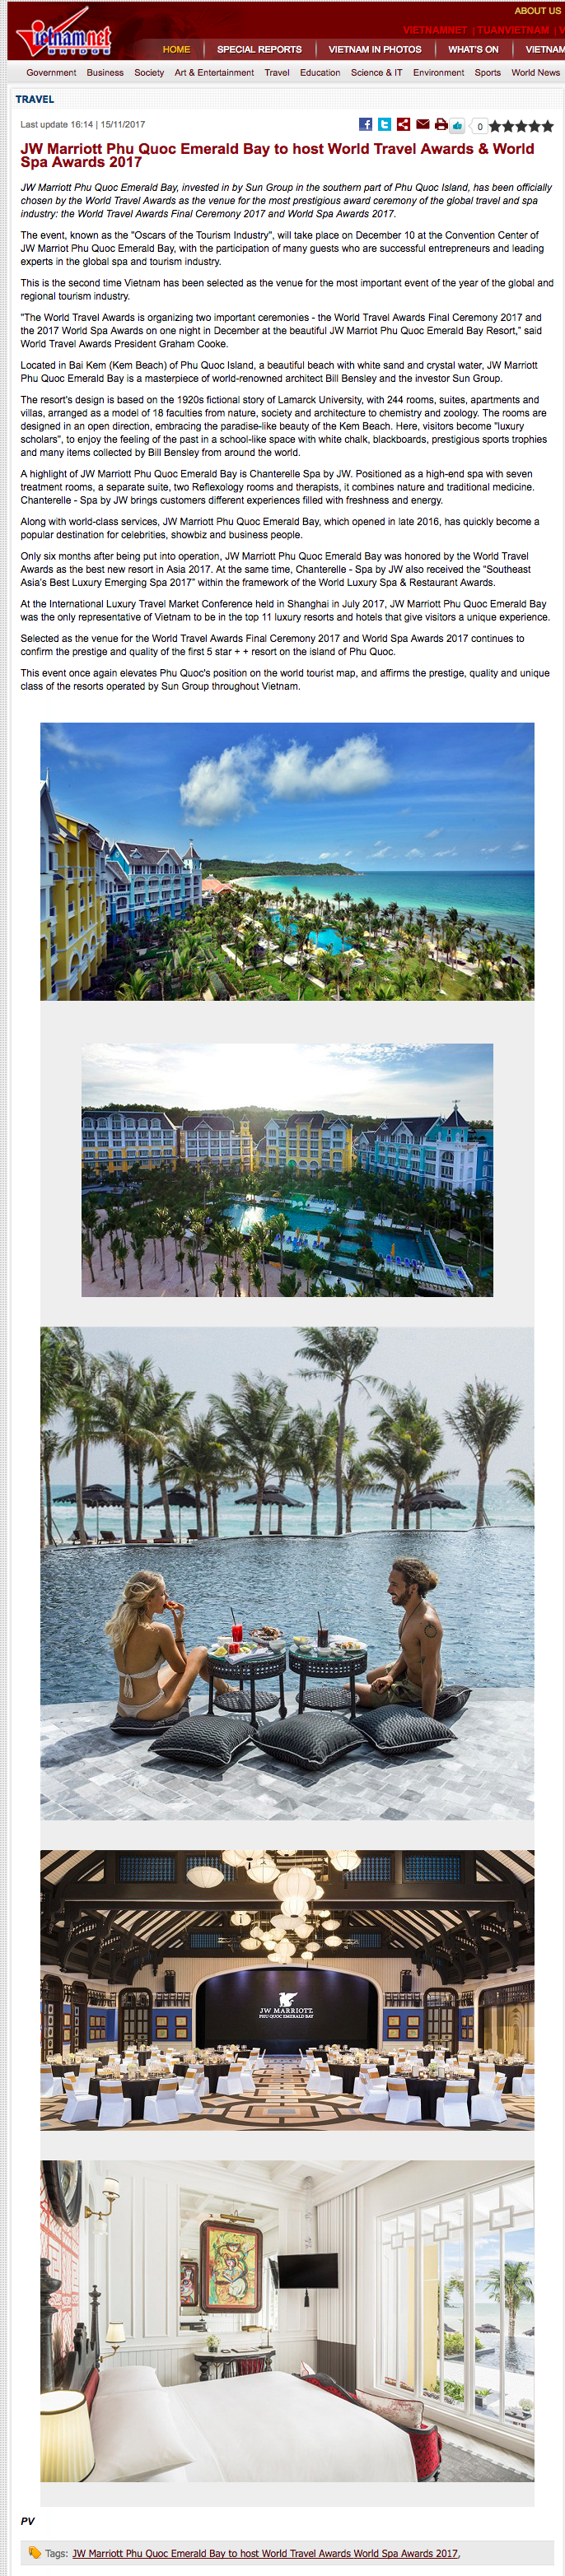 JW Marriott Phu Quoc Emerald Bay to host World Travel Awards & World Spa Awards 2017